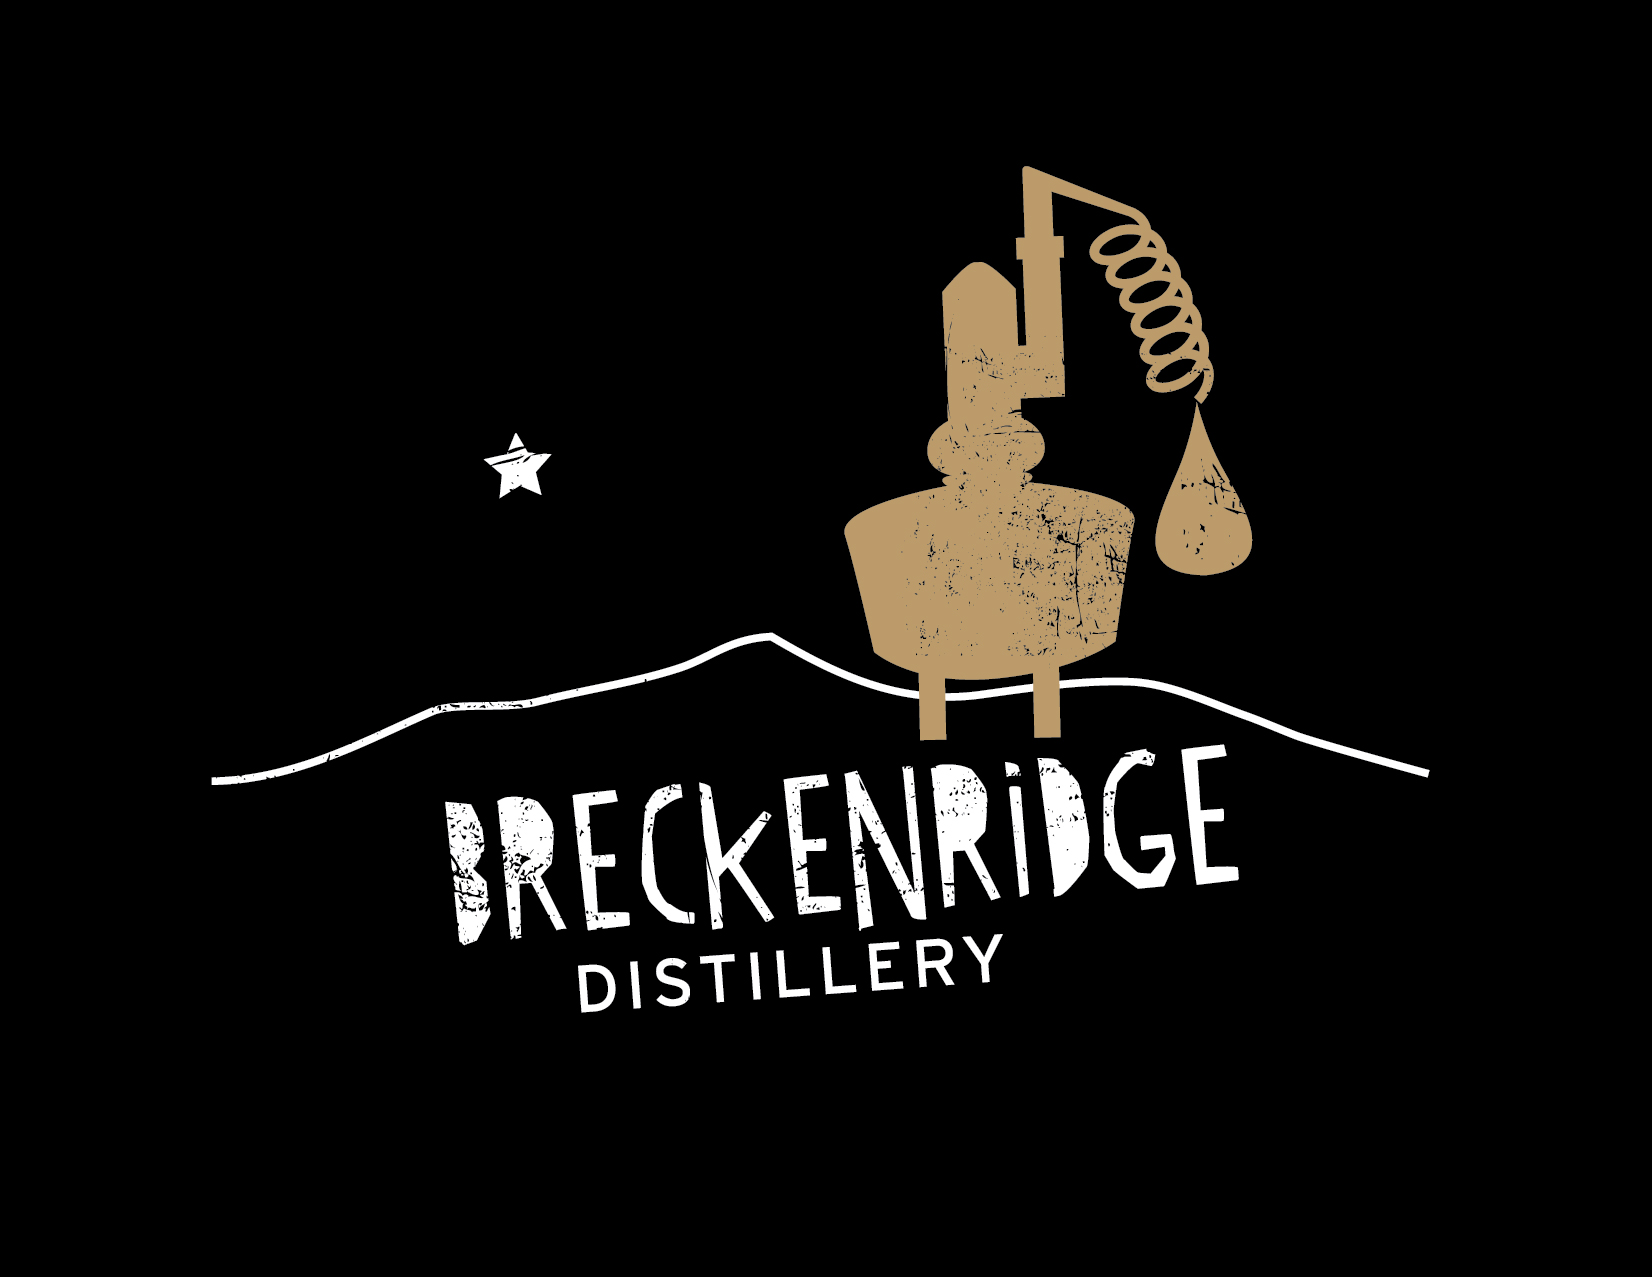 Breckenridge Distillery